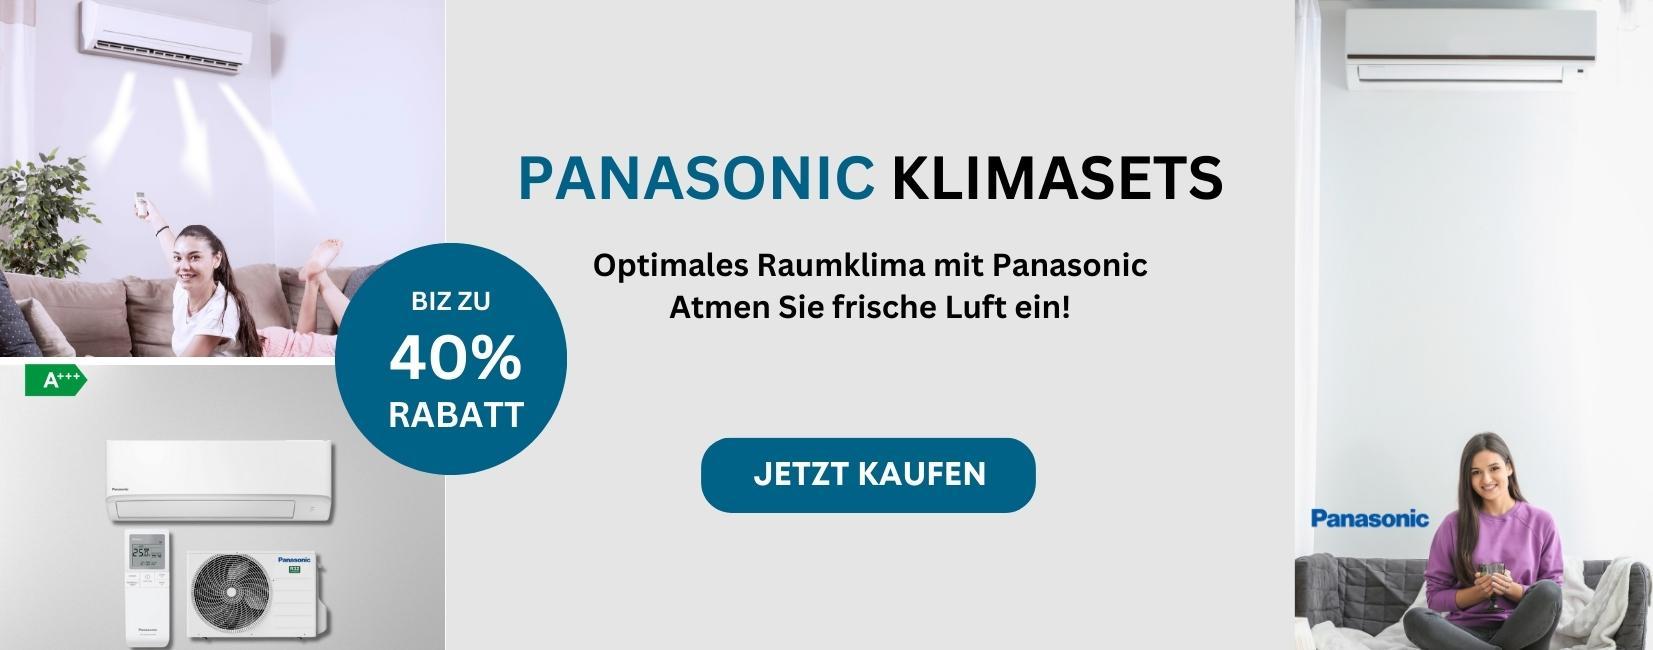 Klimasets Panasonic